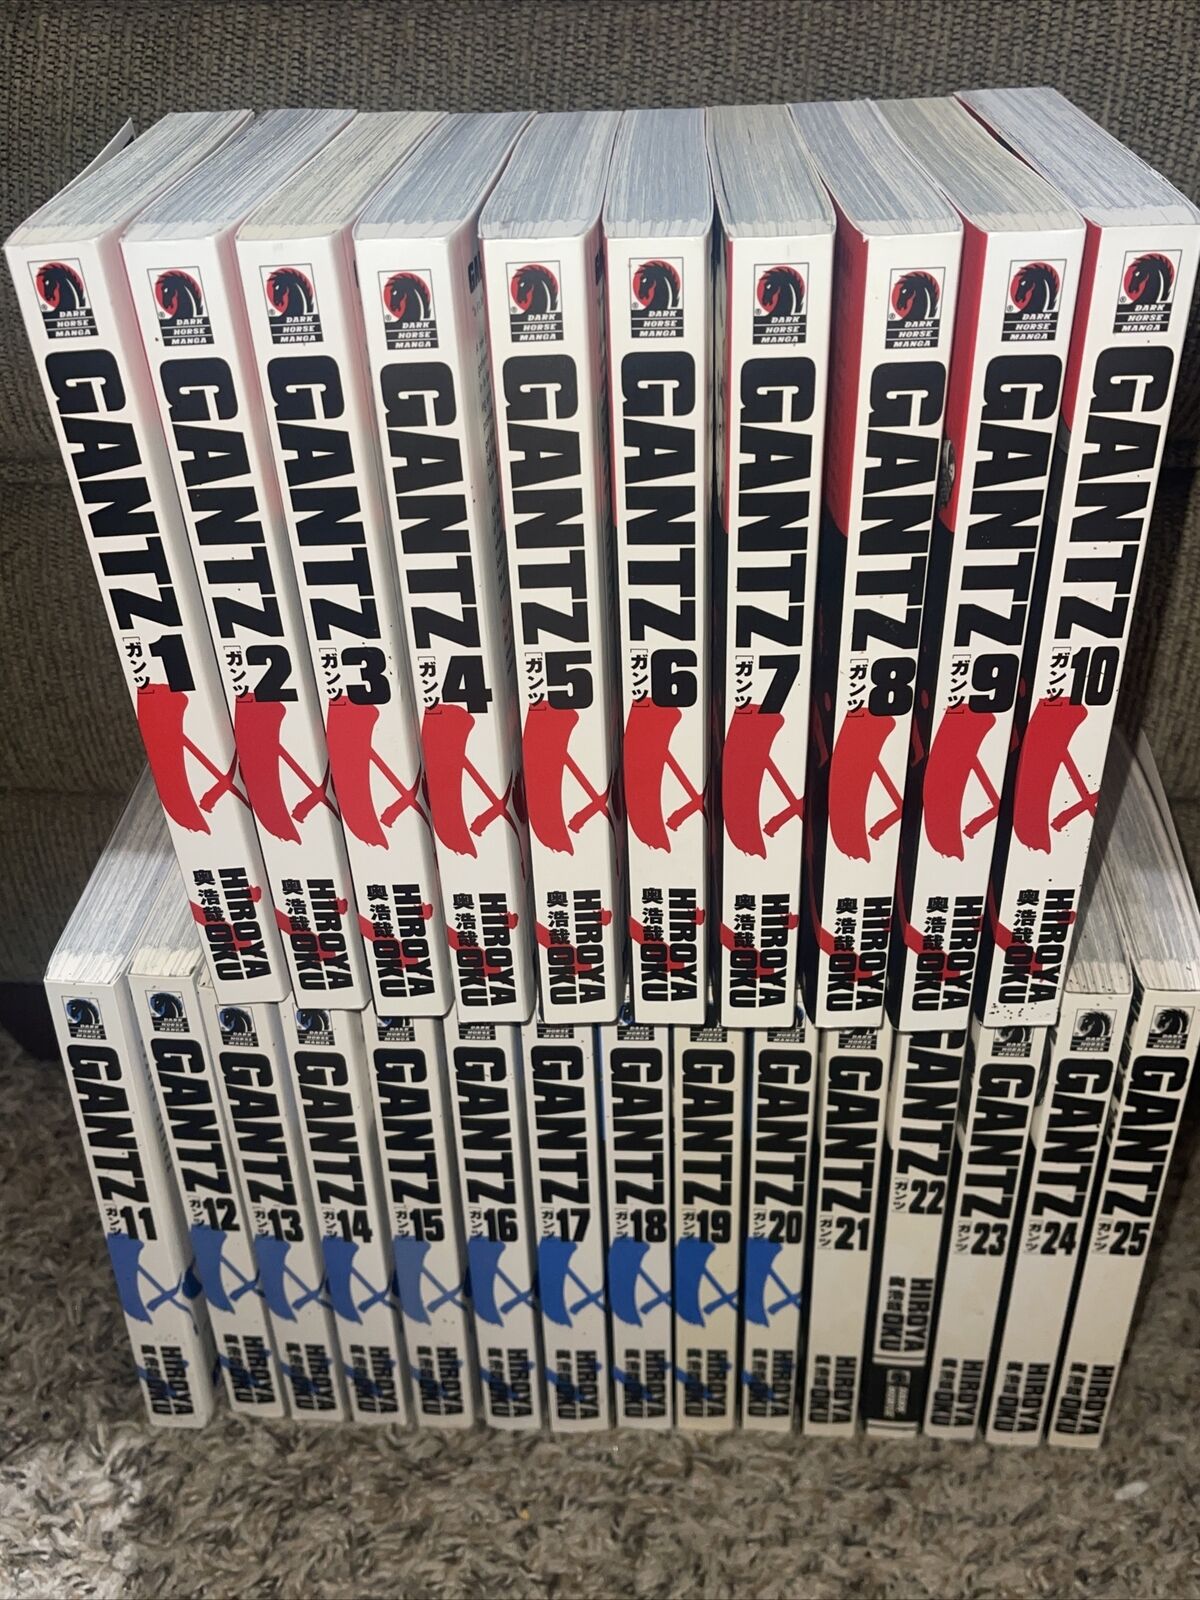 Gantz Volumes 1-25 English Language Dark Horse All First Edition Great Condition